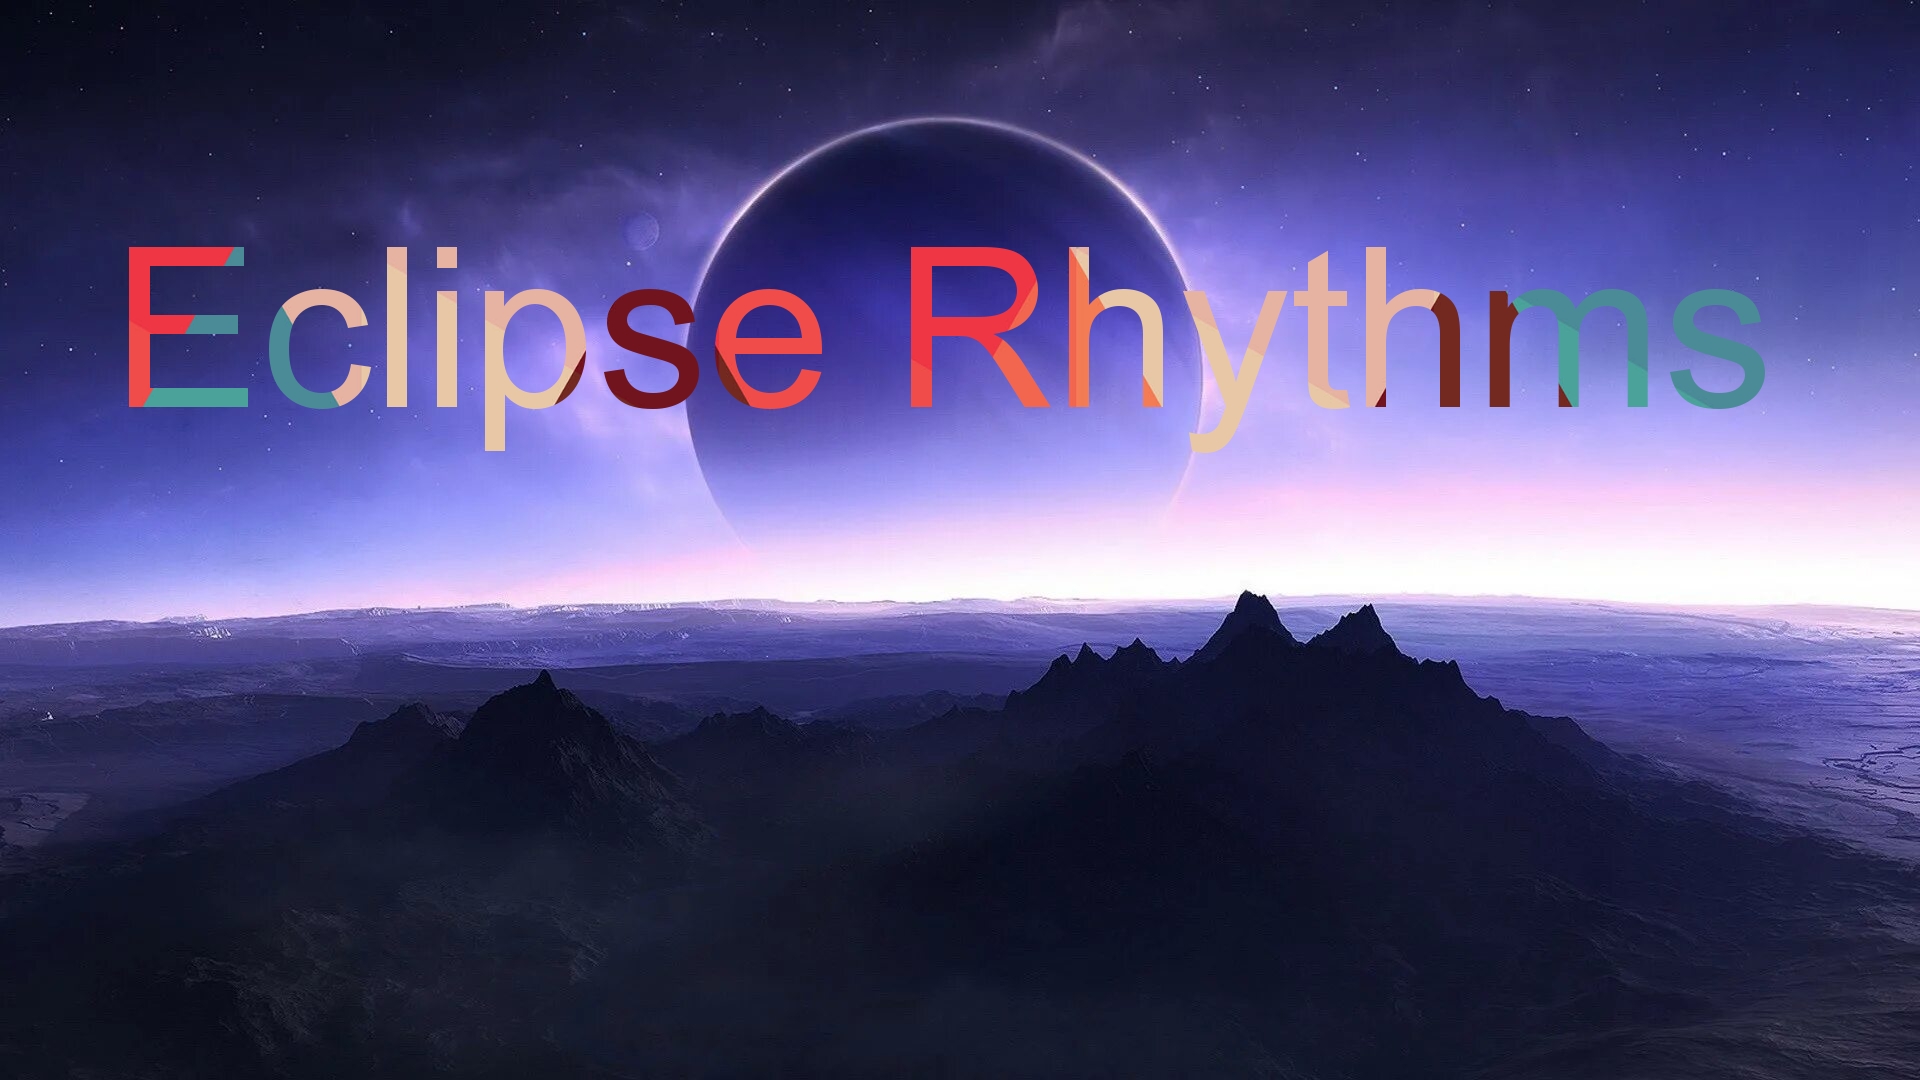 lunar stars 
( 달의 별 )
(이클립스 리듬)
"Eclipse Rhythms